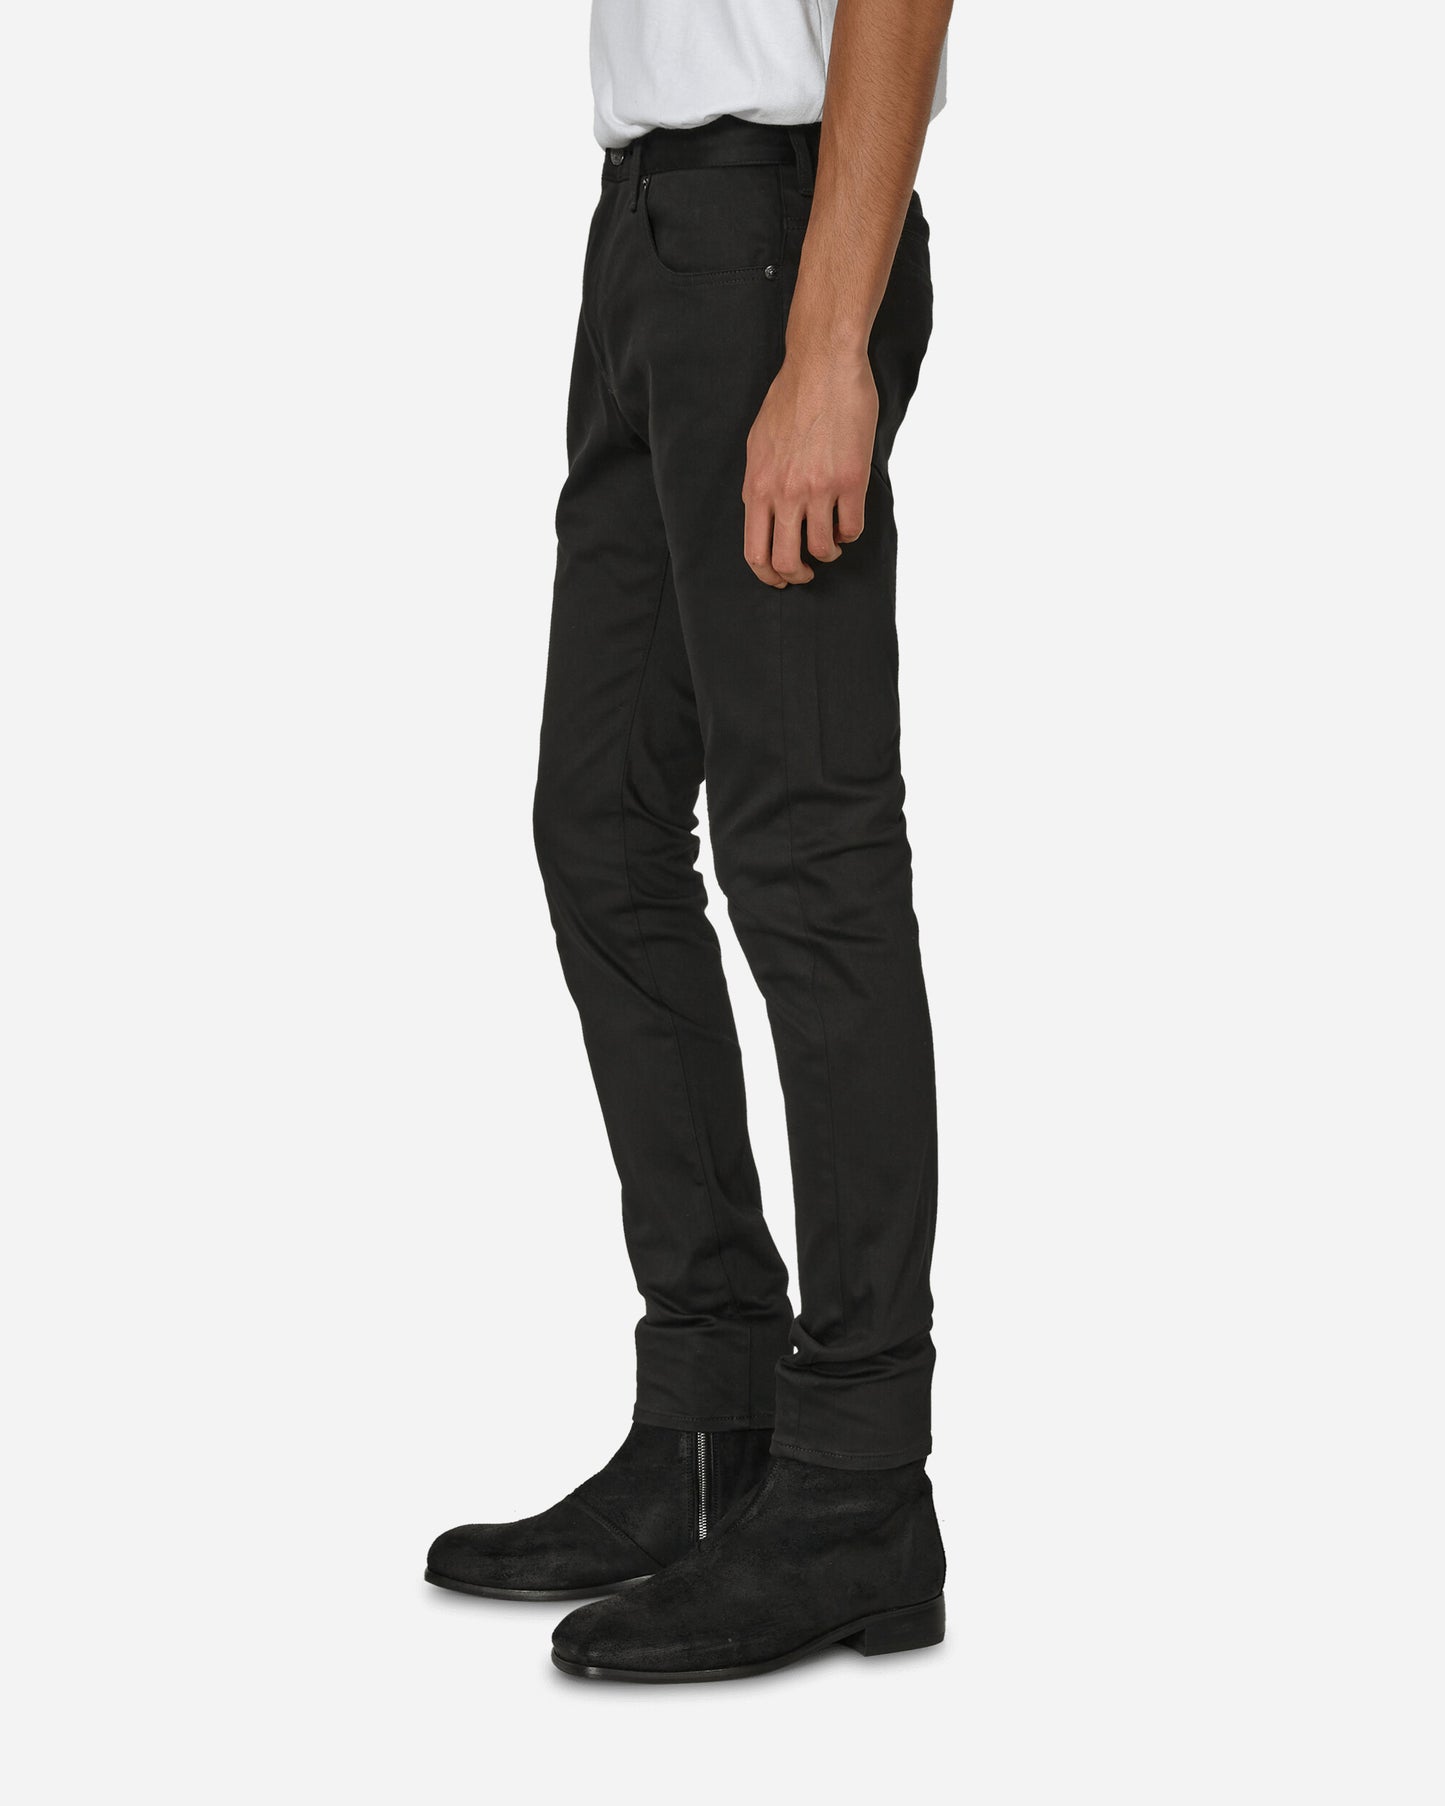 Undercover Bolt 5 Pocket Skinny Pant Black Pants Trousers UC2C9504 1